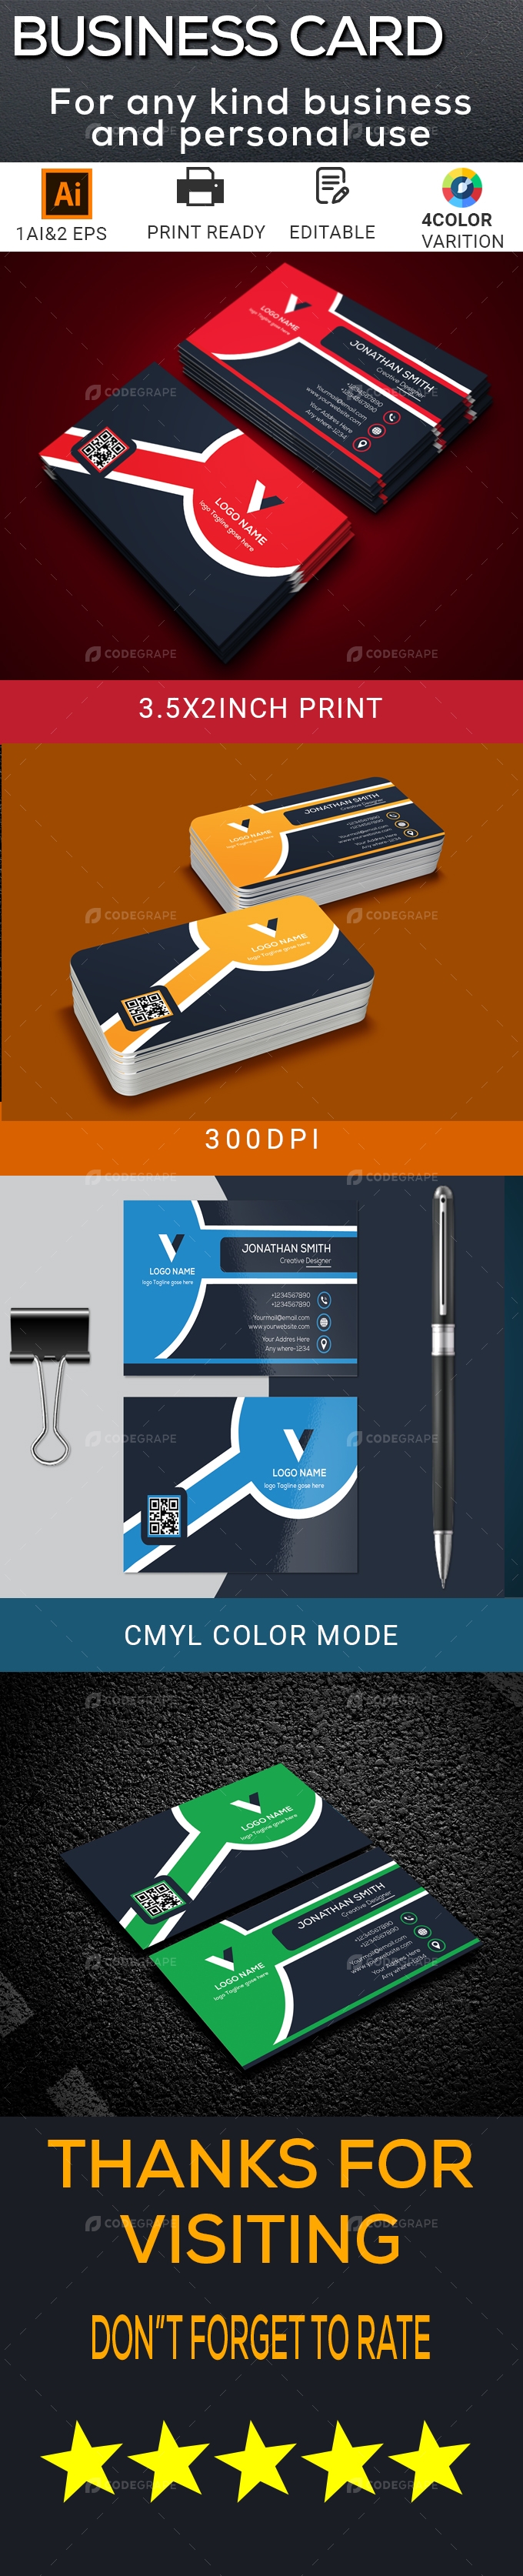 Business Card Design vector template